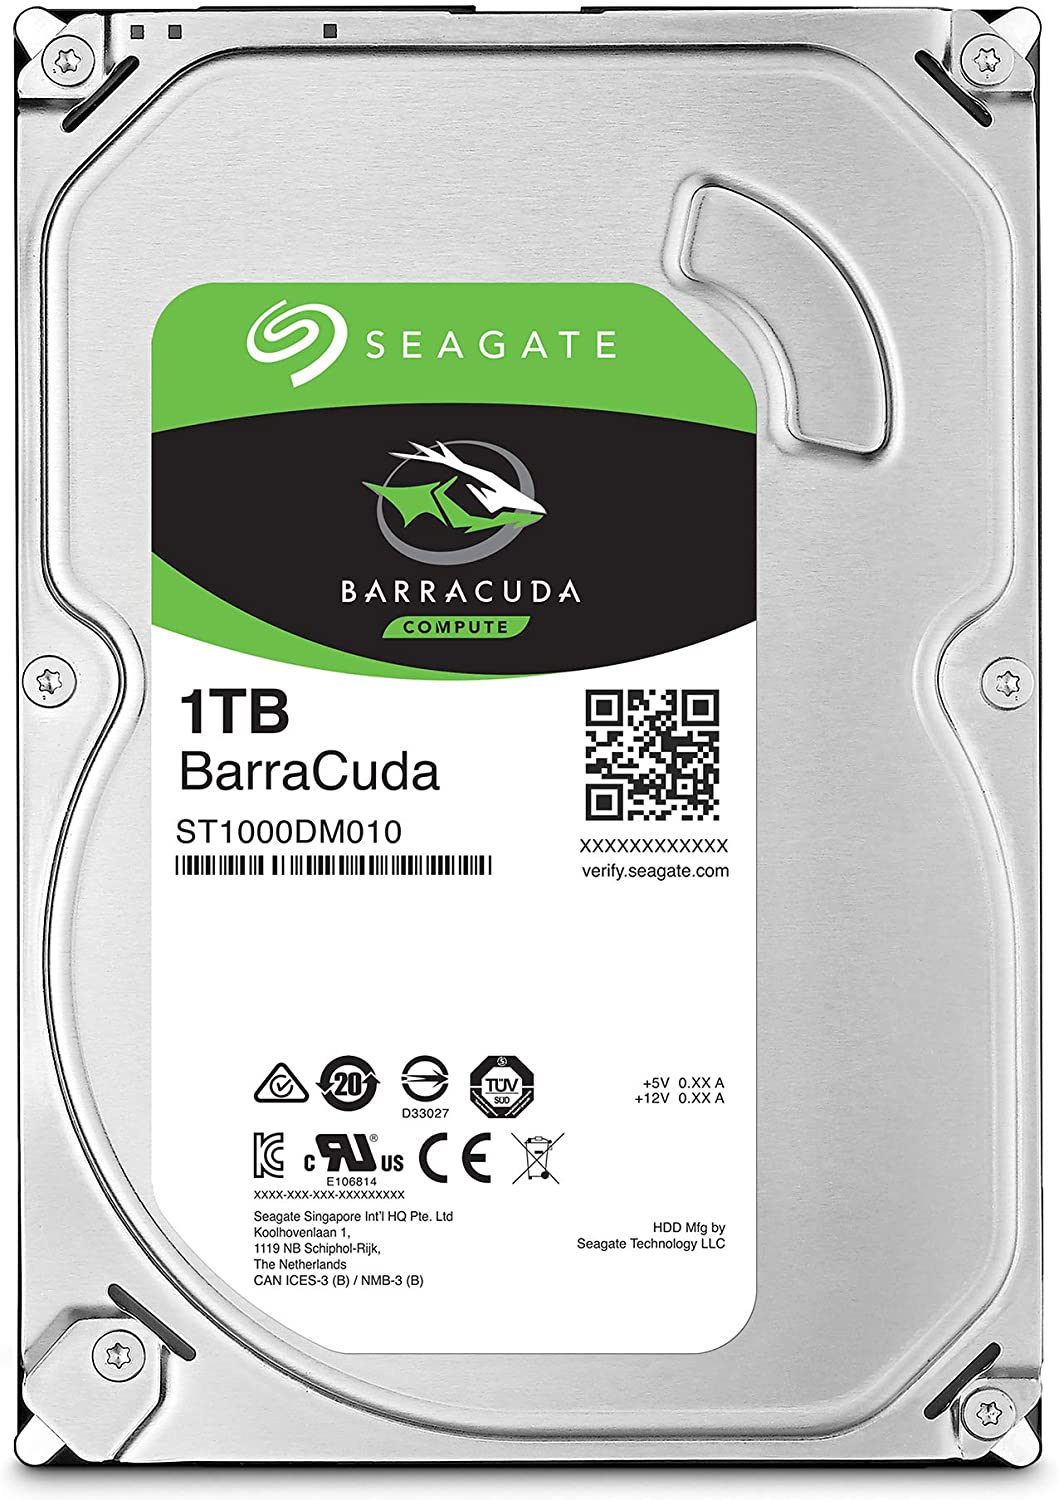 Seagate BarraCuda 1TB HDD - Dragon Master For Electronics